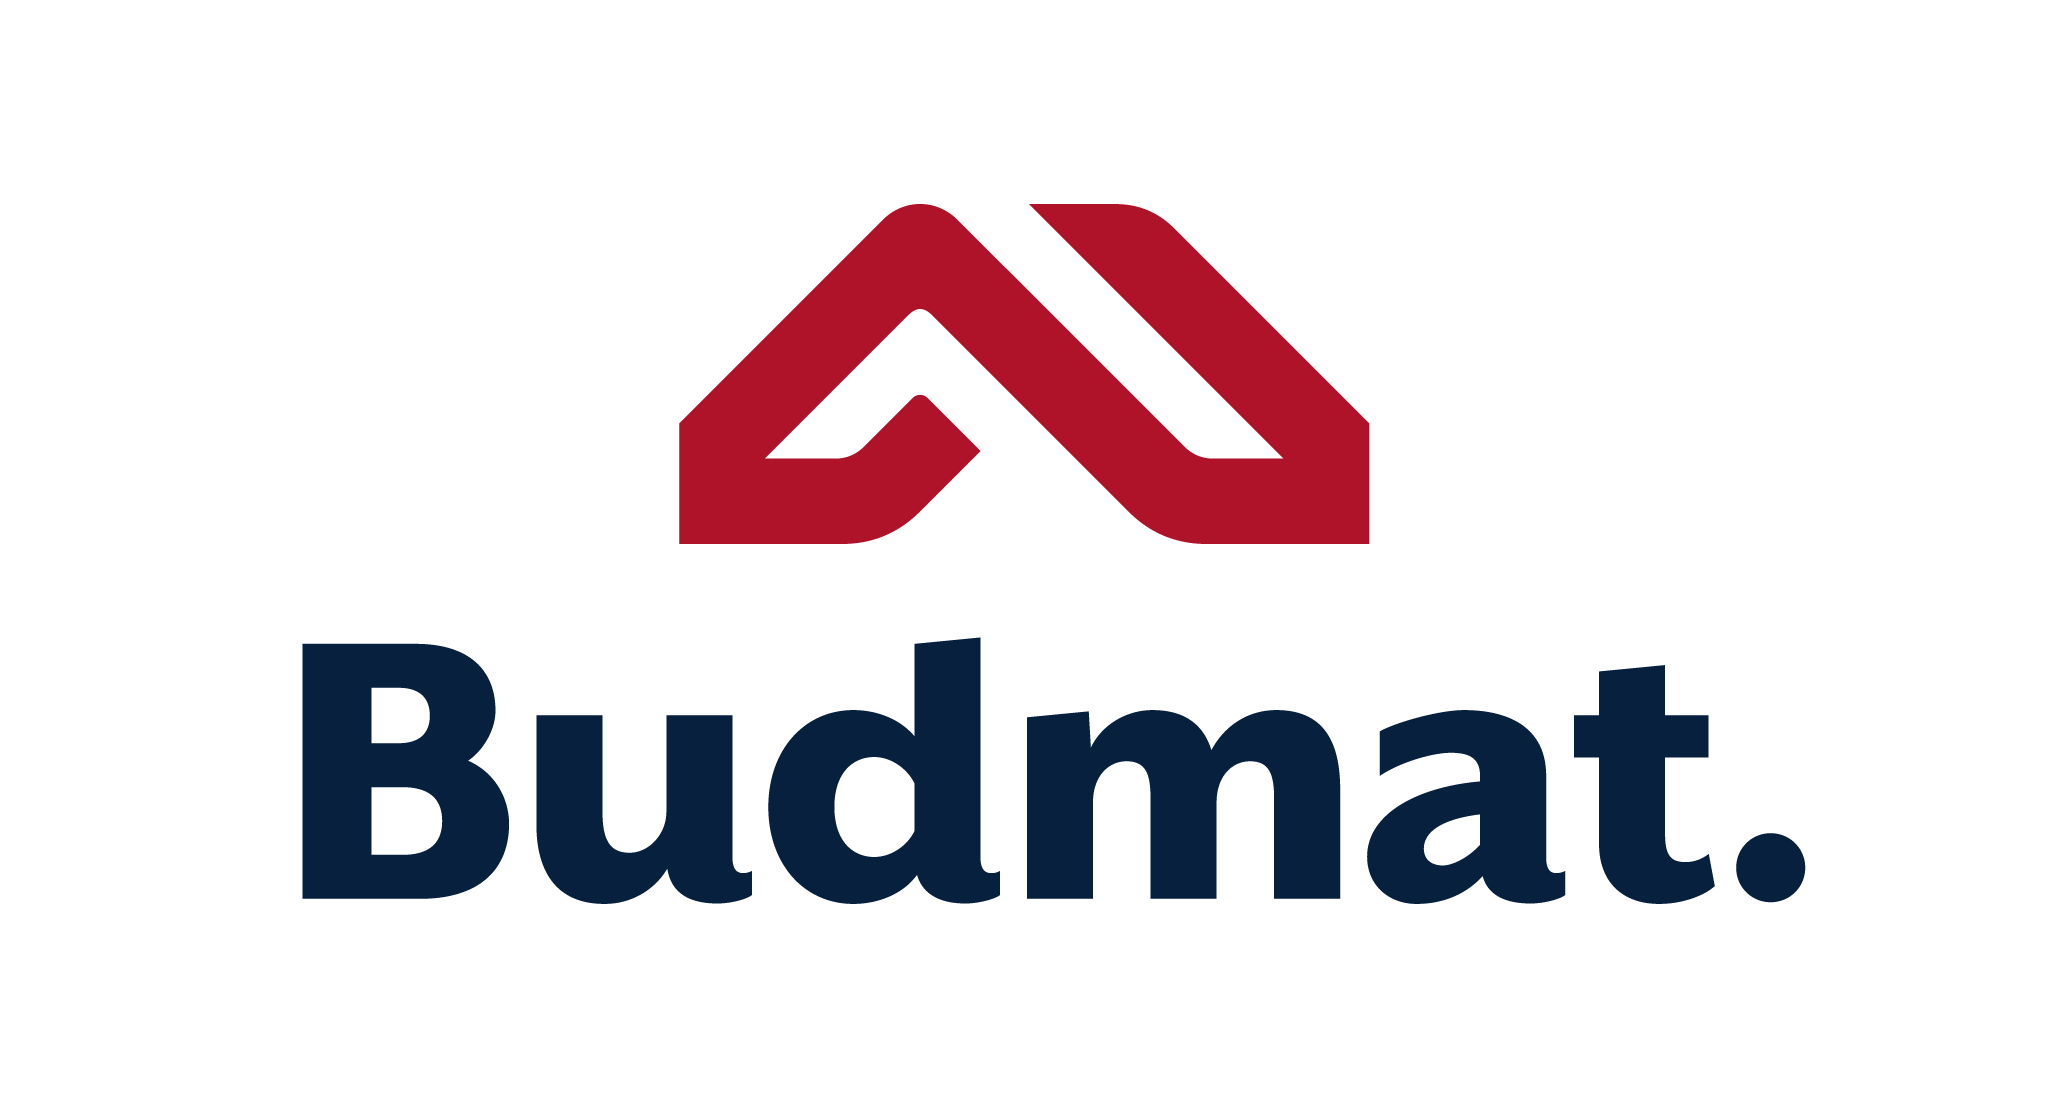 Logo BudMat